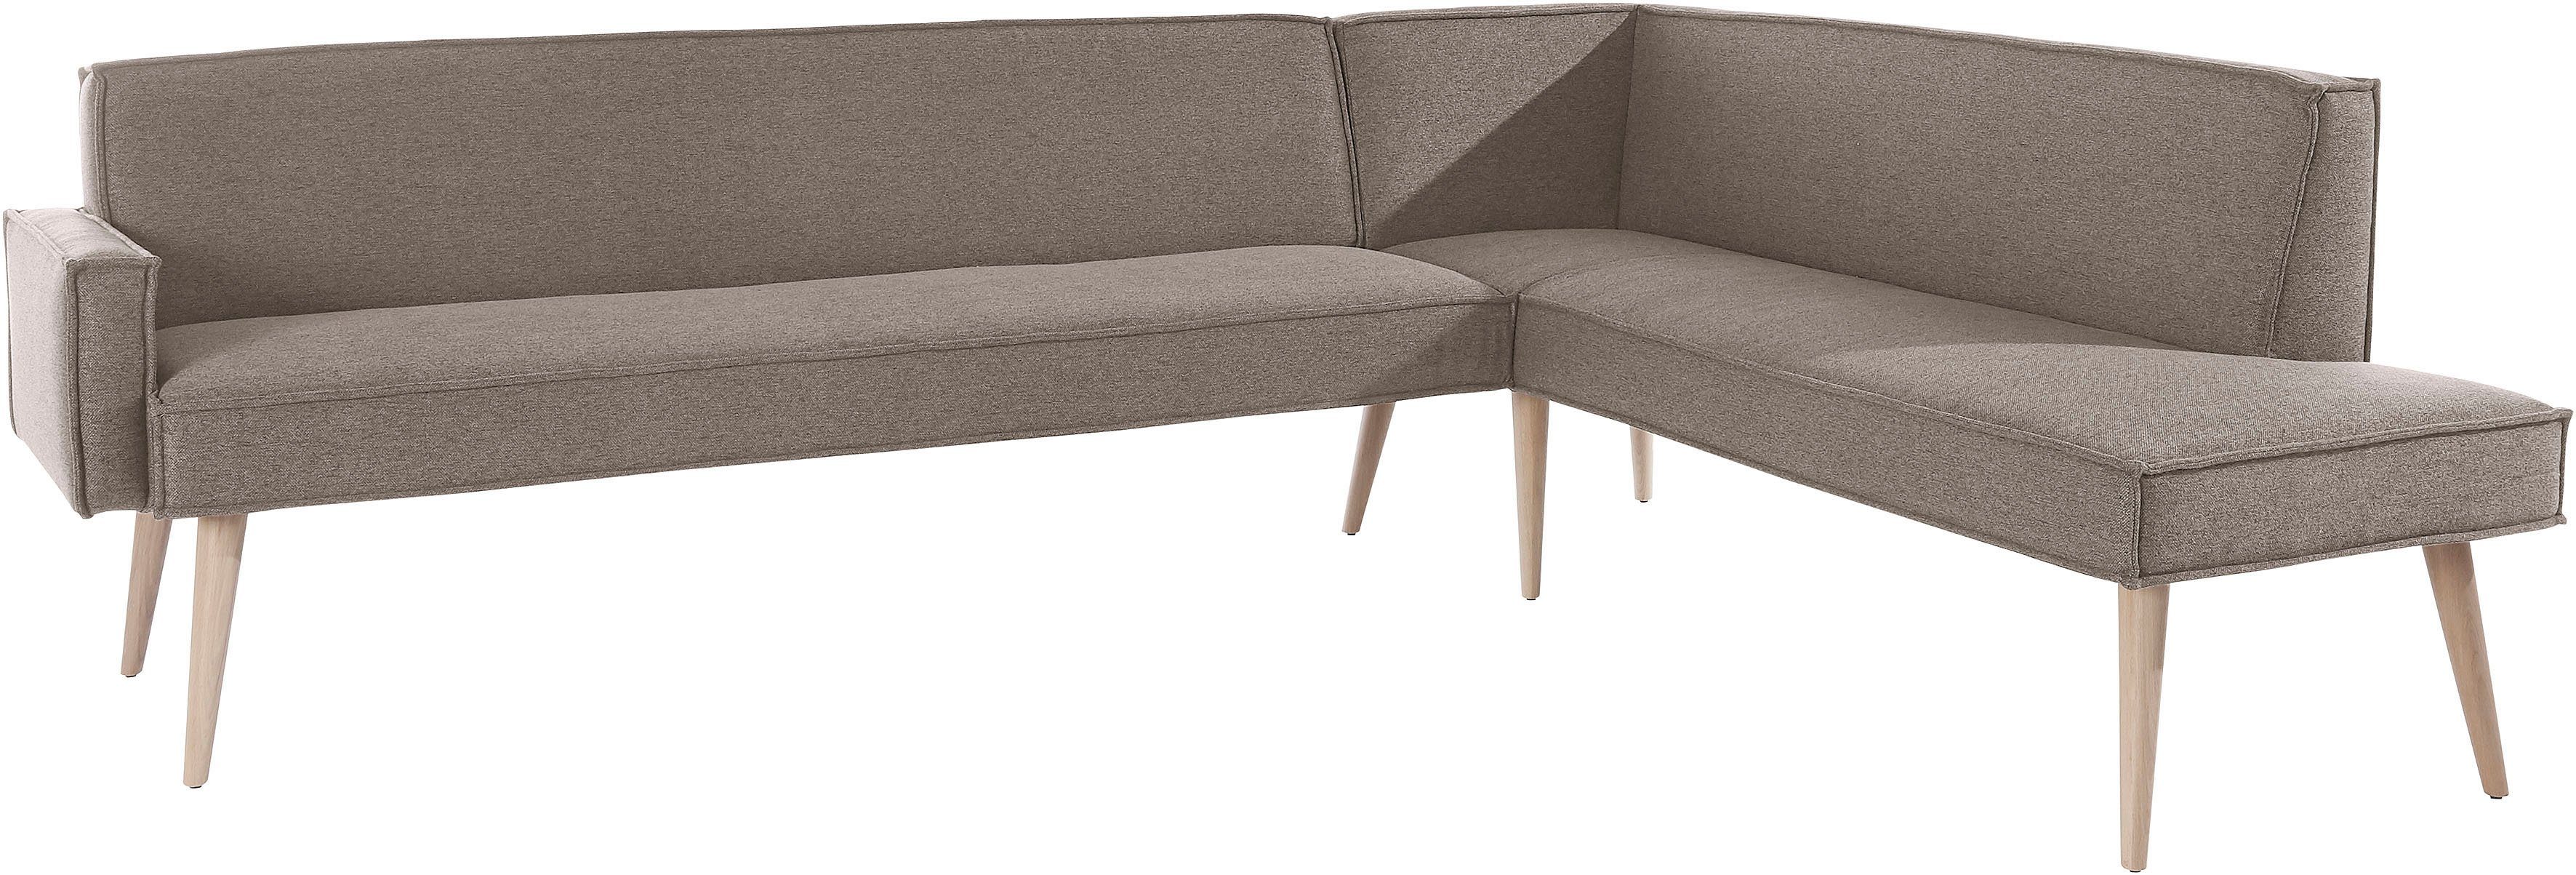 stellbar, hochwertiger sofa im - In Frei Raum Verarbeitung Eckbank Lungo, fashion exxpo